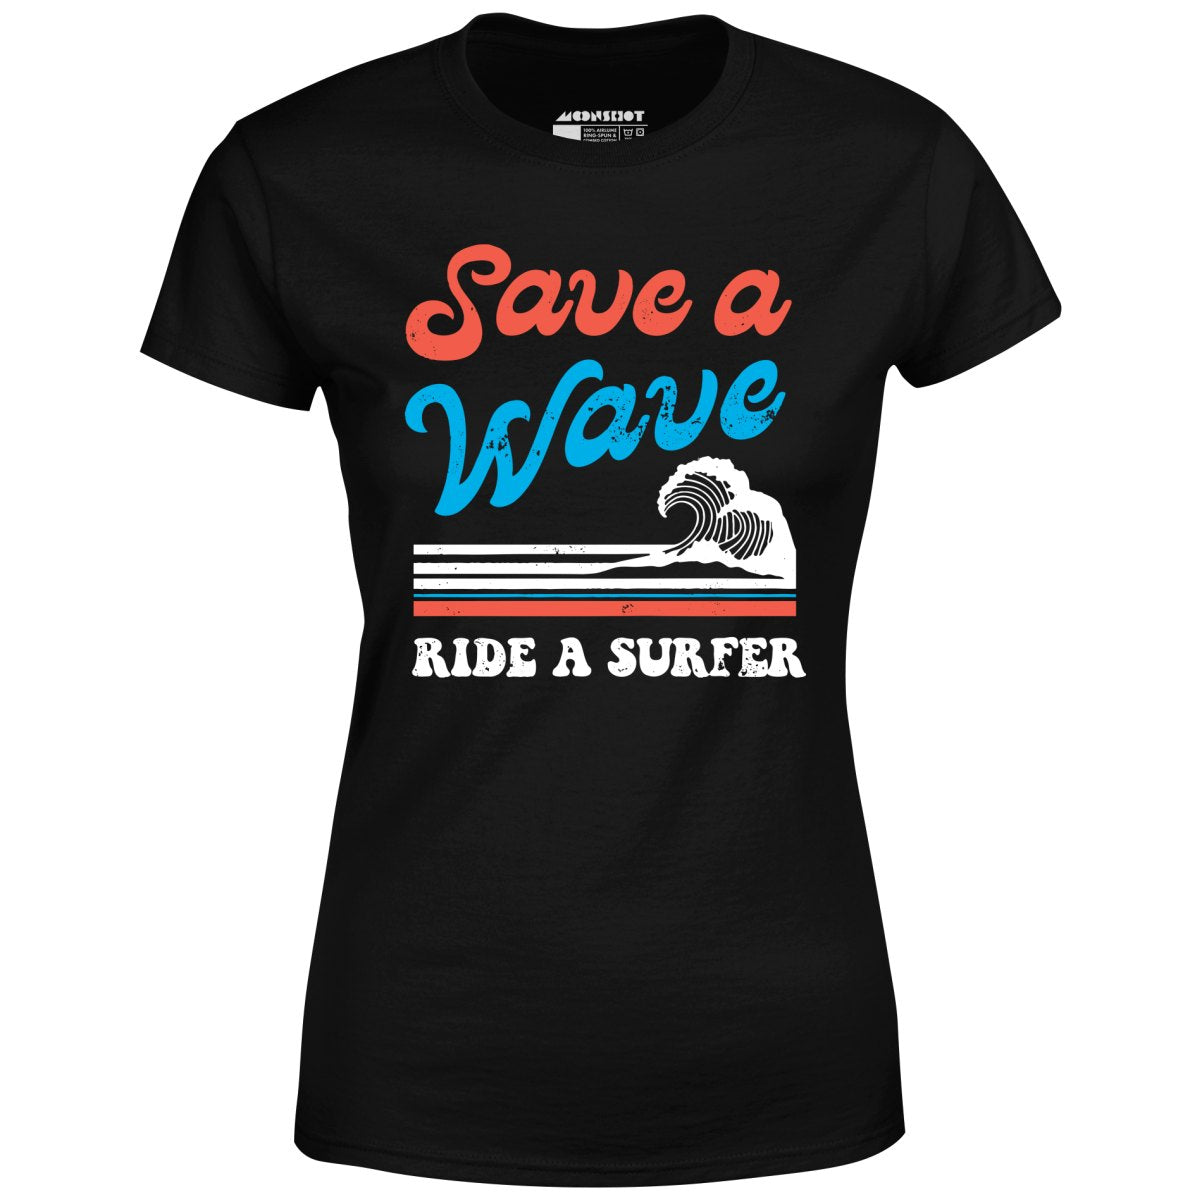 Save a Wave Ride a Surfer - Women's T-Shirt